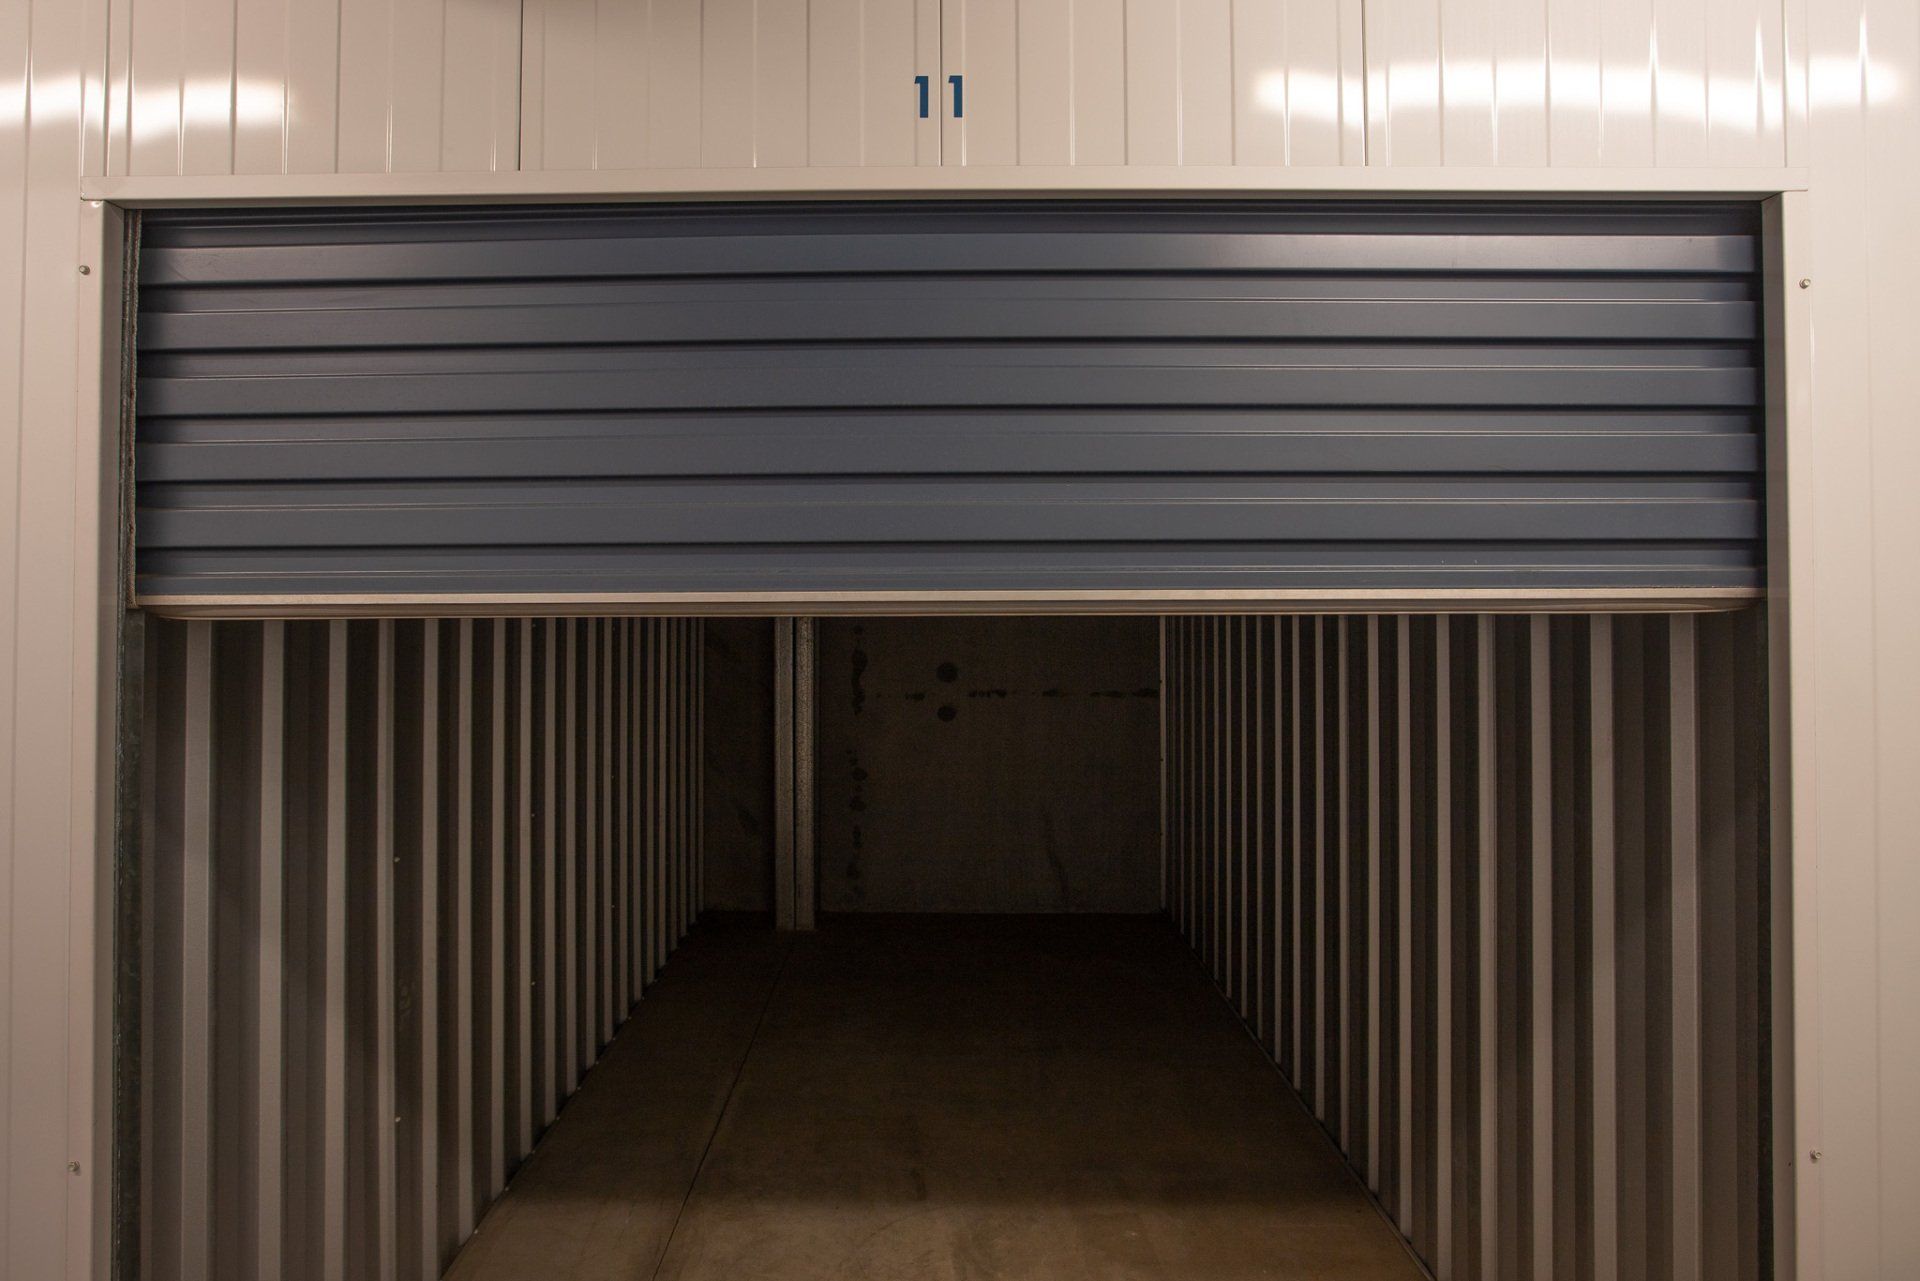 Numbered Self Storage — Storage Facility In Rothbury, NSW